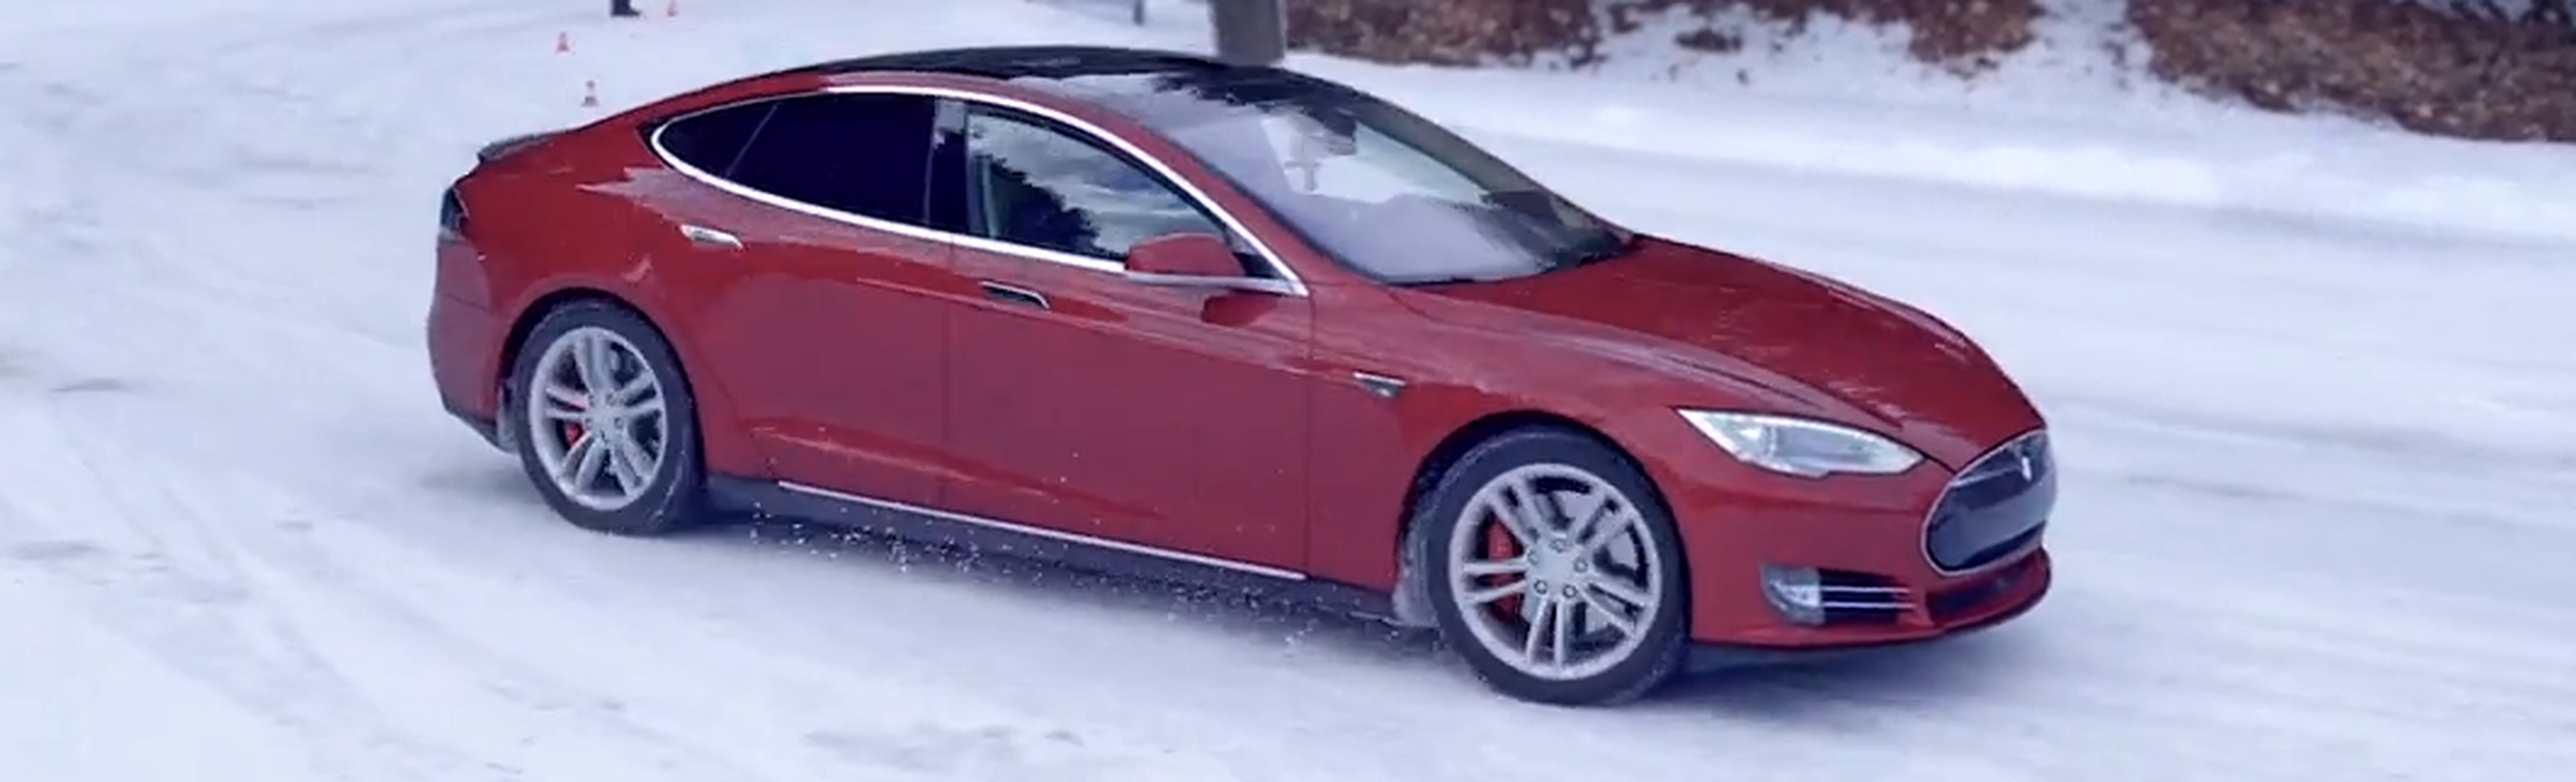 Tesla Model S: mira como se mueve ¡sobre la nieve!